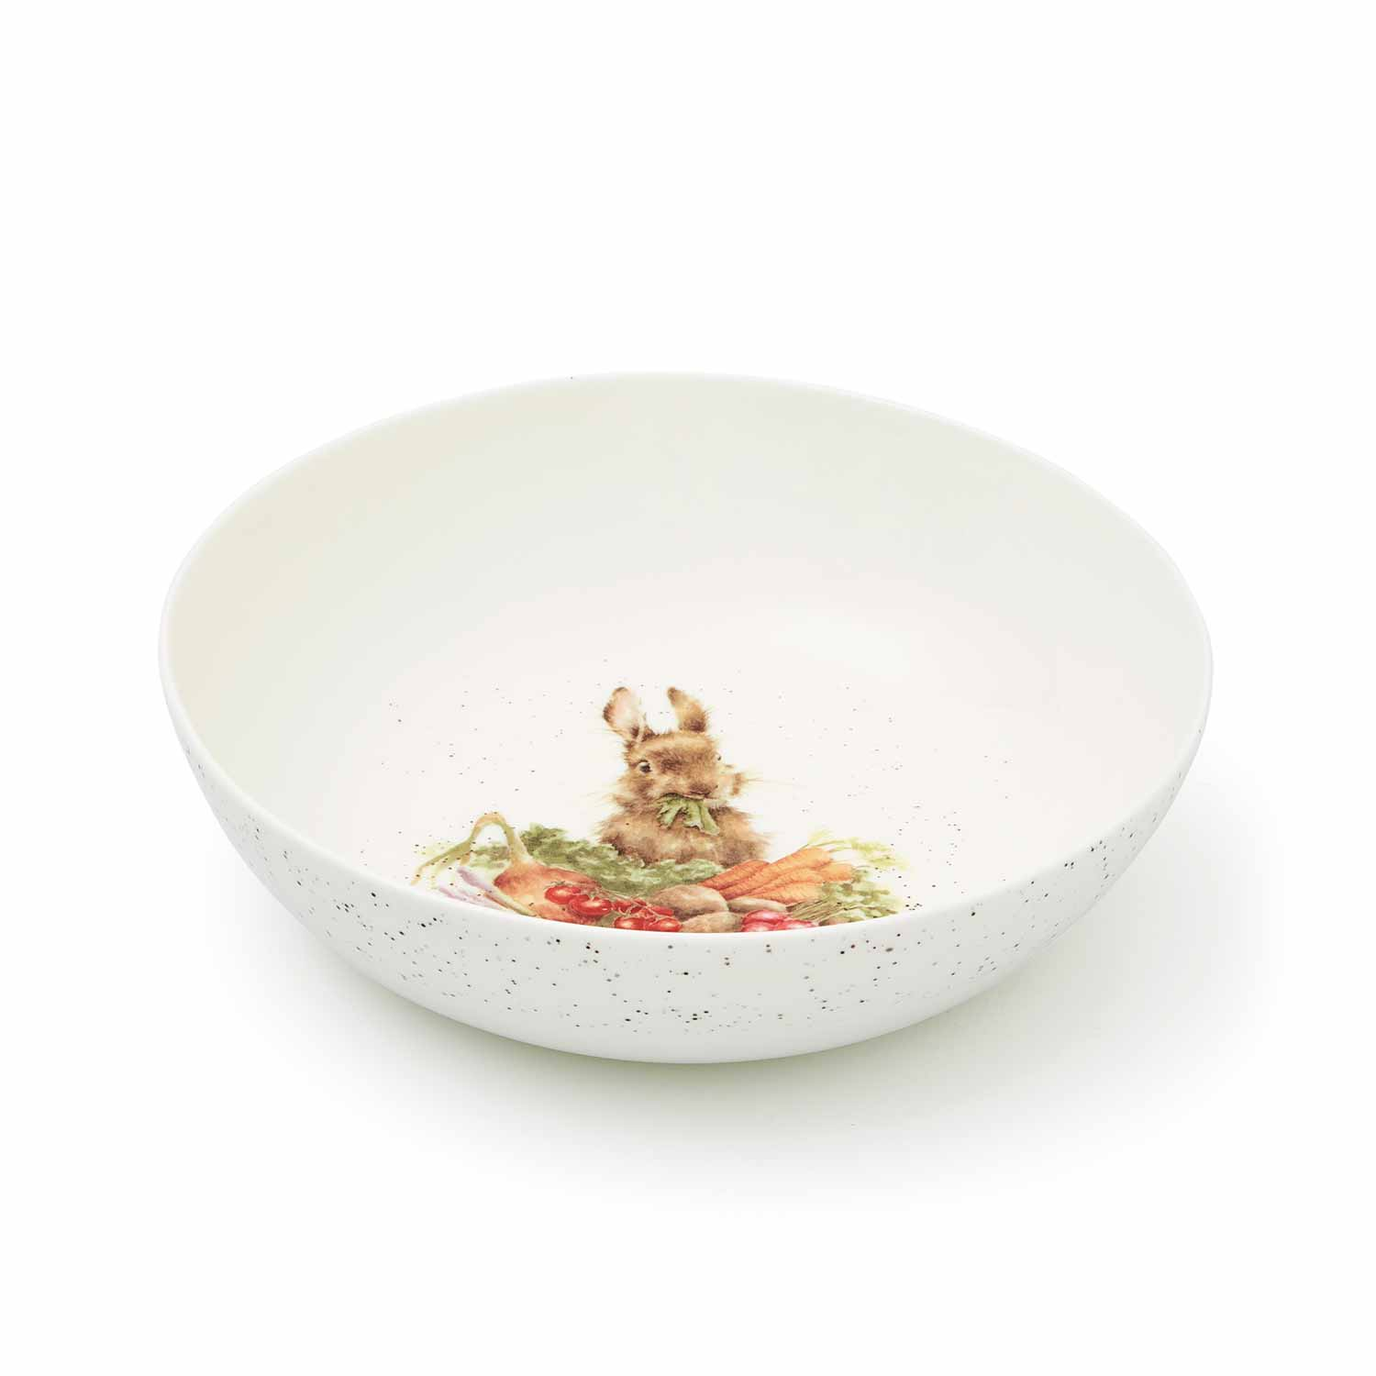 Wrendale Designs Rabbit Salad Bowl